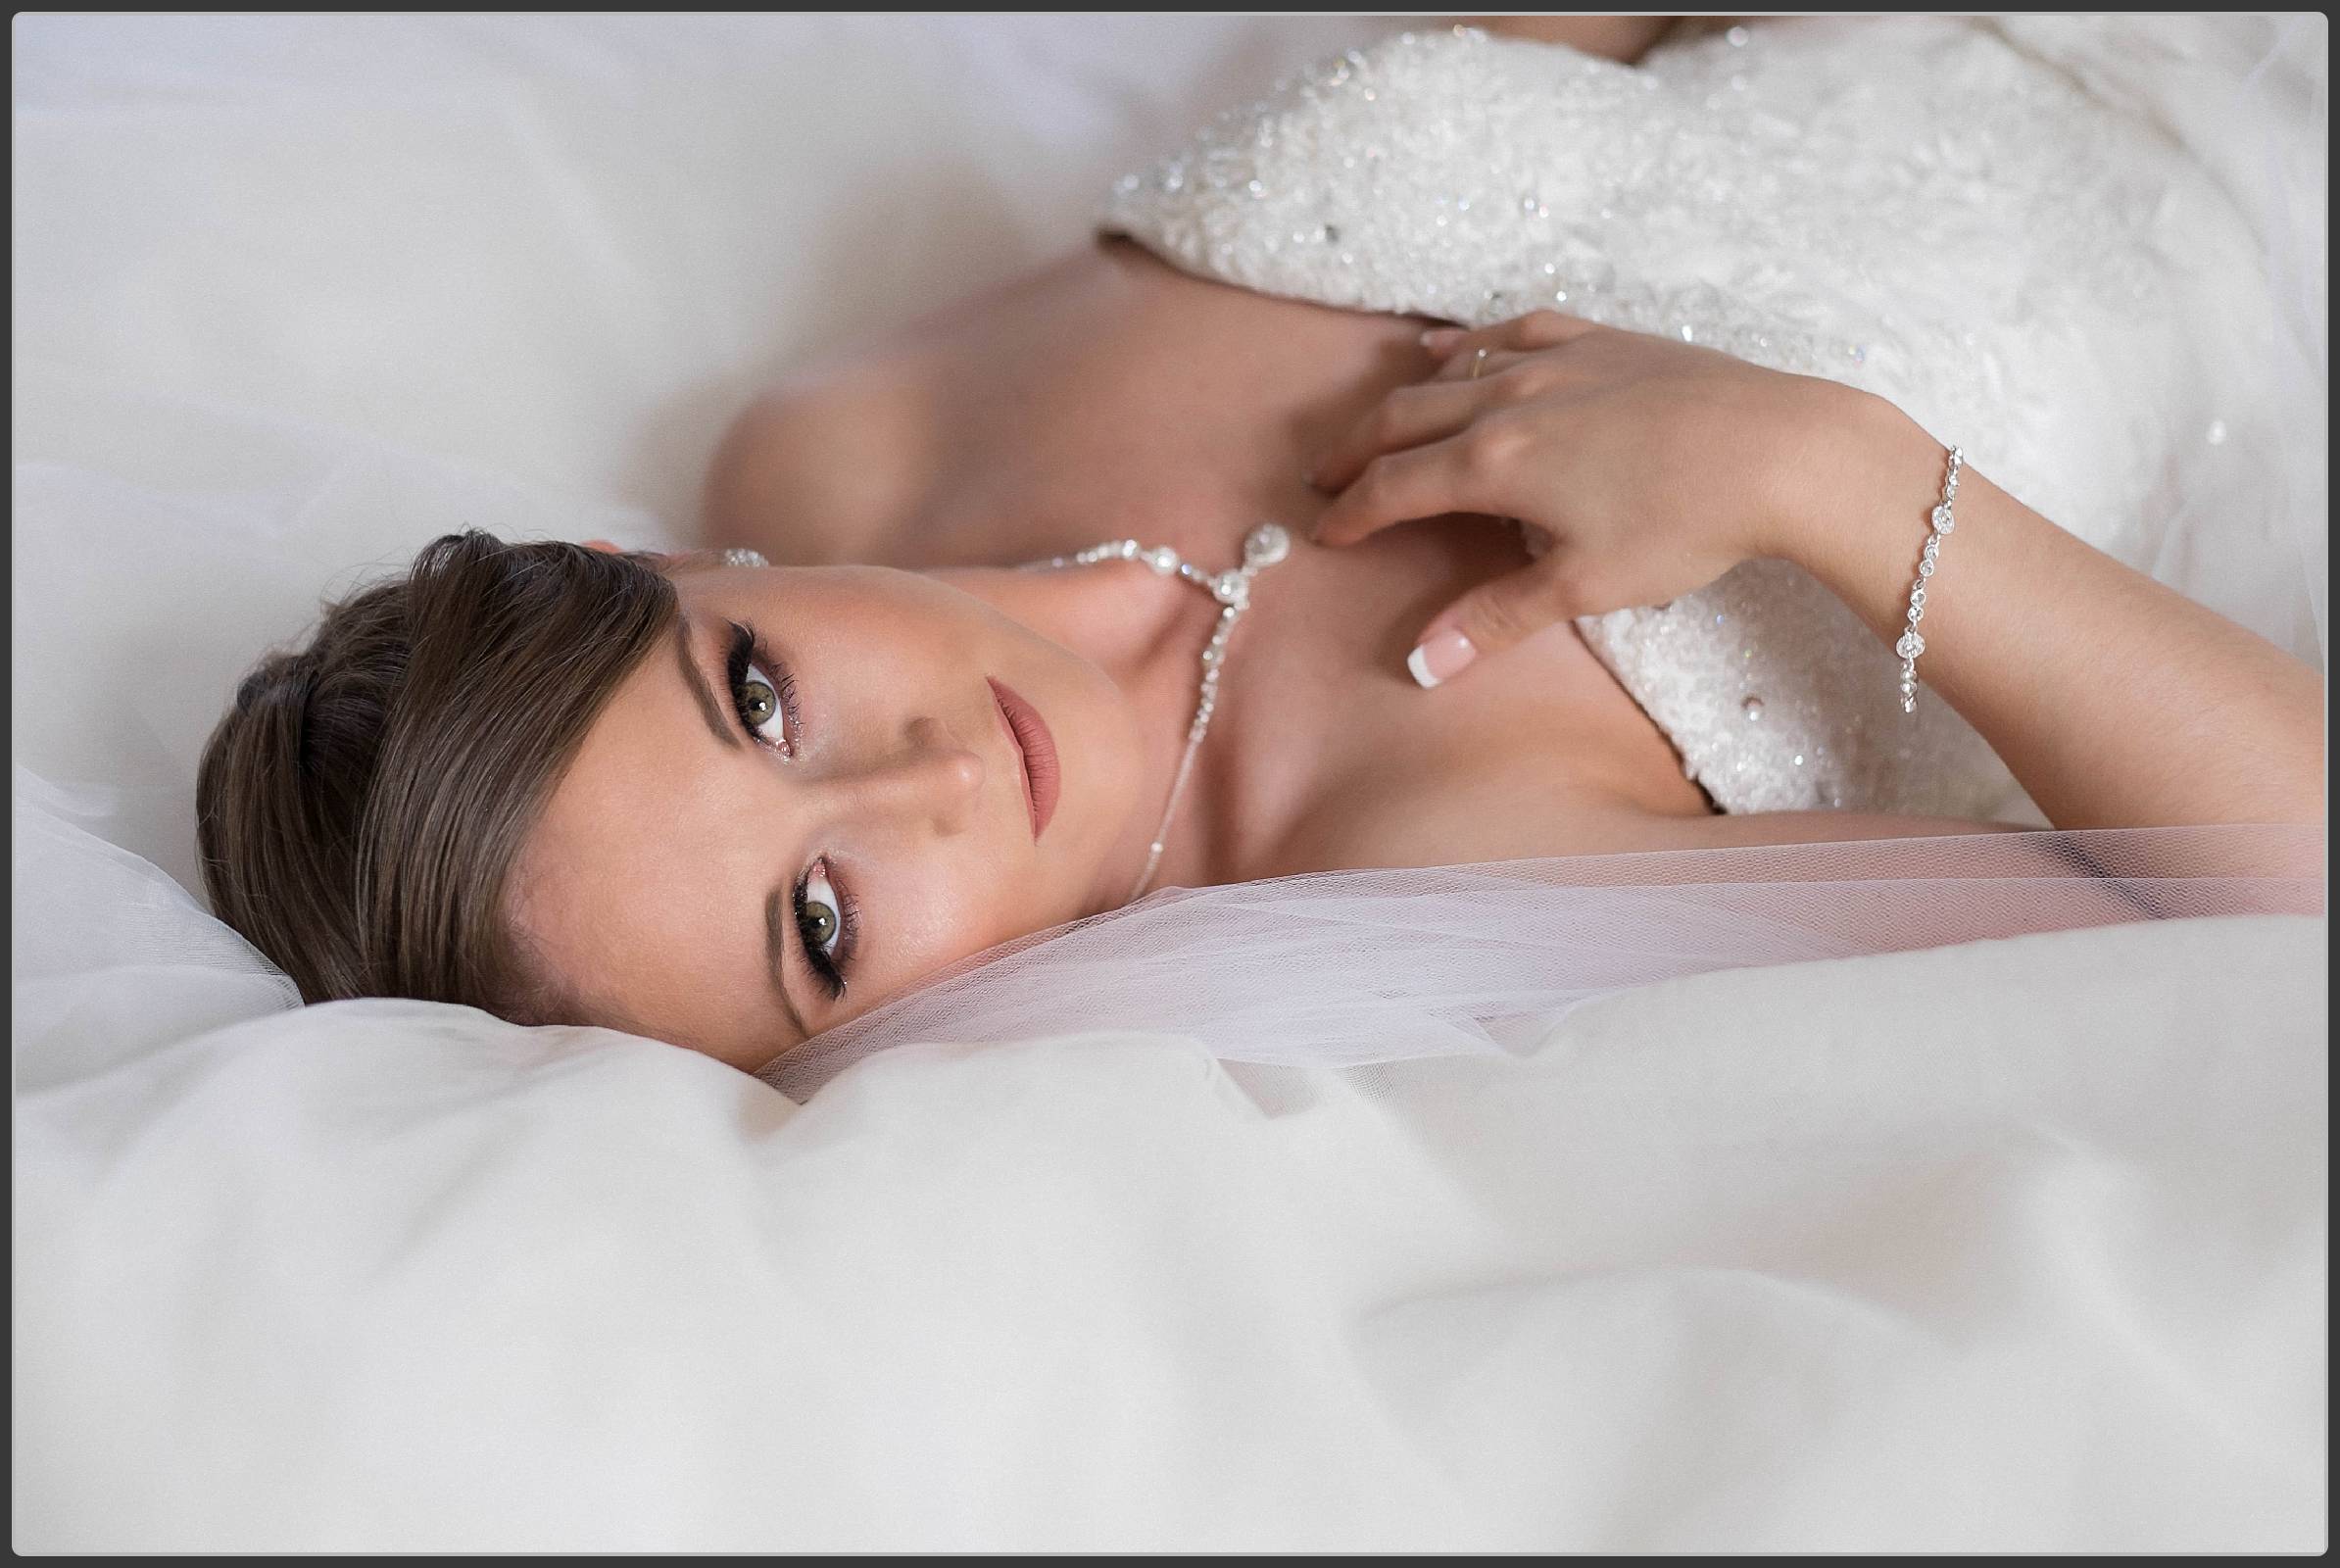 The bride lying on her wedding dress